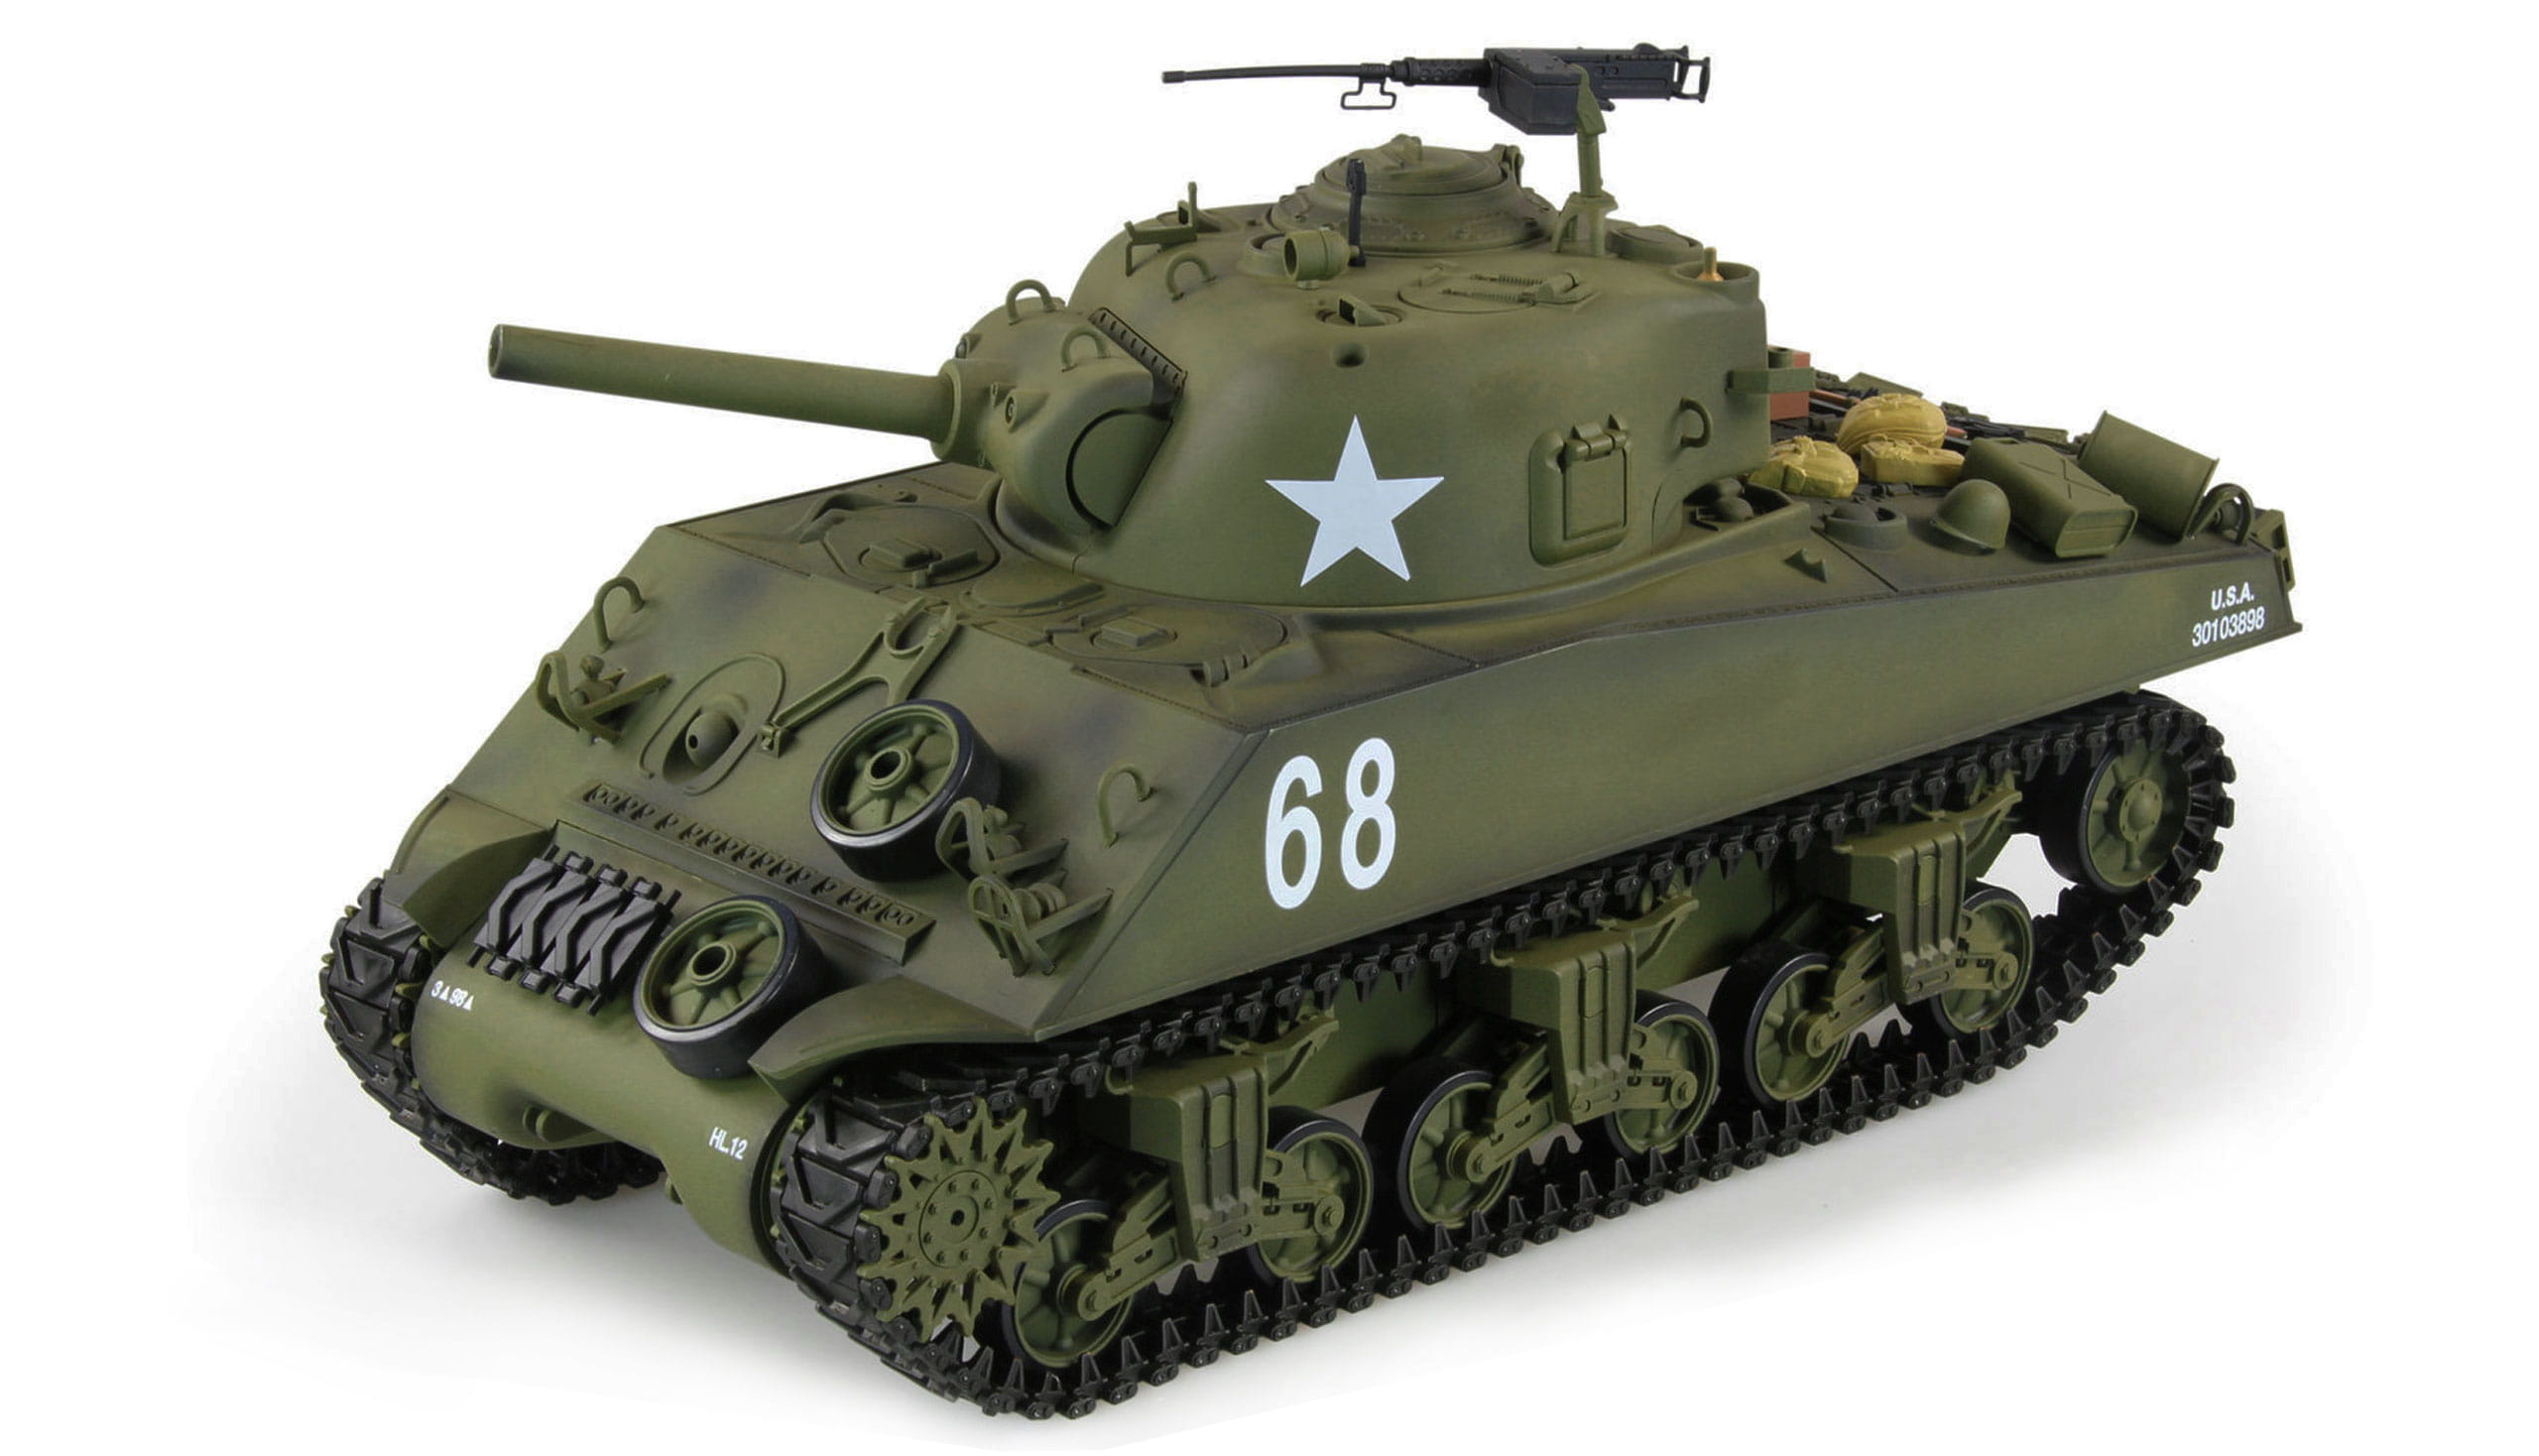 Amewi RC Panzer 1:16 U.S. M4A3 Sherman Advanced Line IR BB